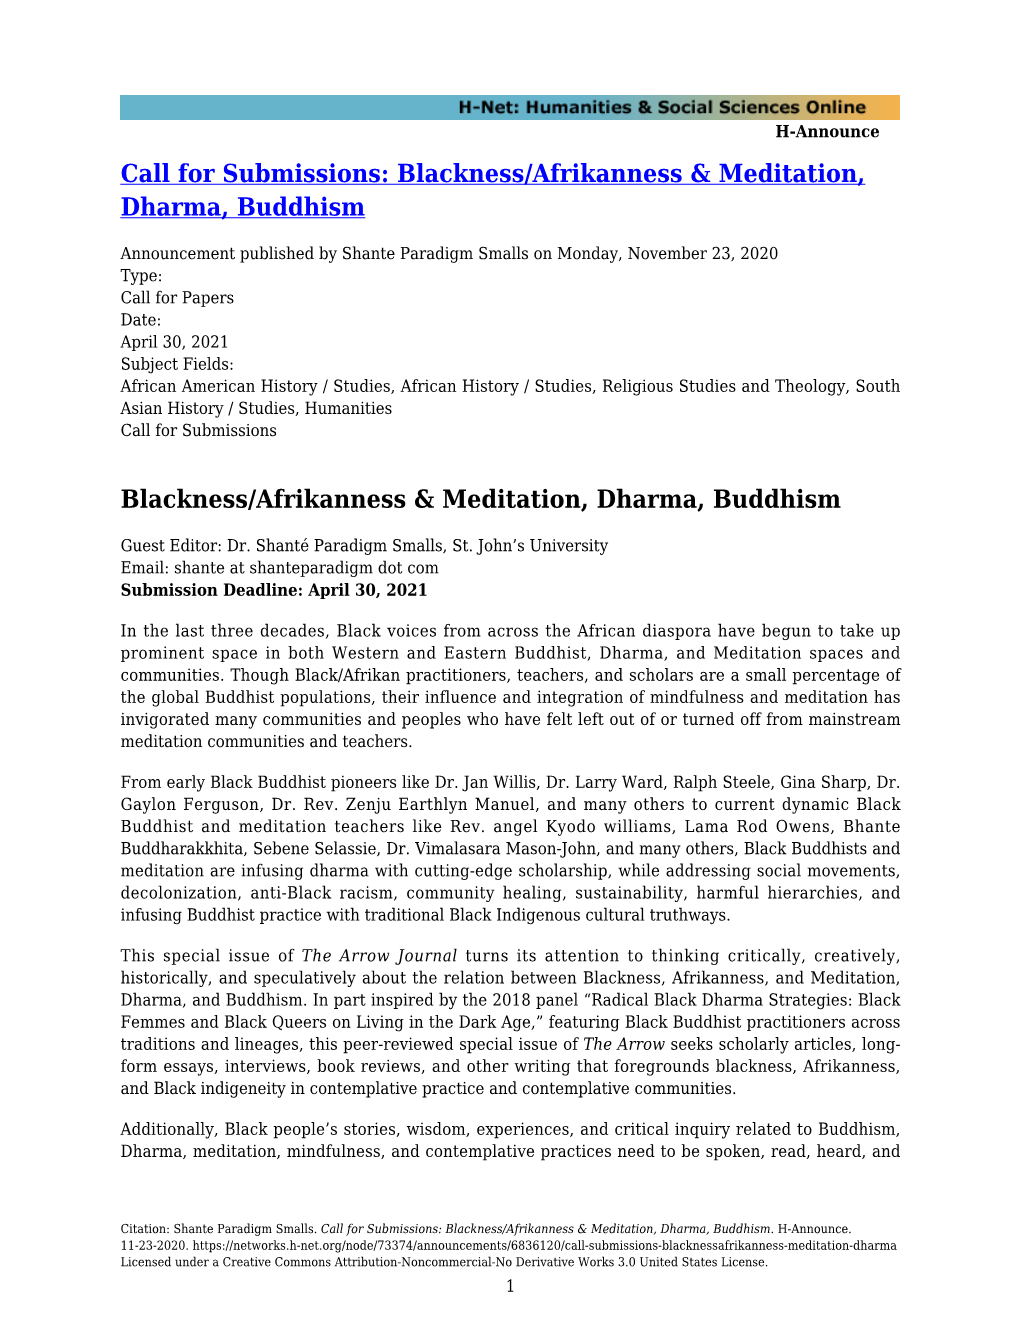 Blackness/Afrikanness & Meditation, Dharma, Buddhism